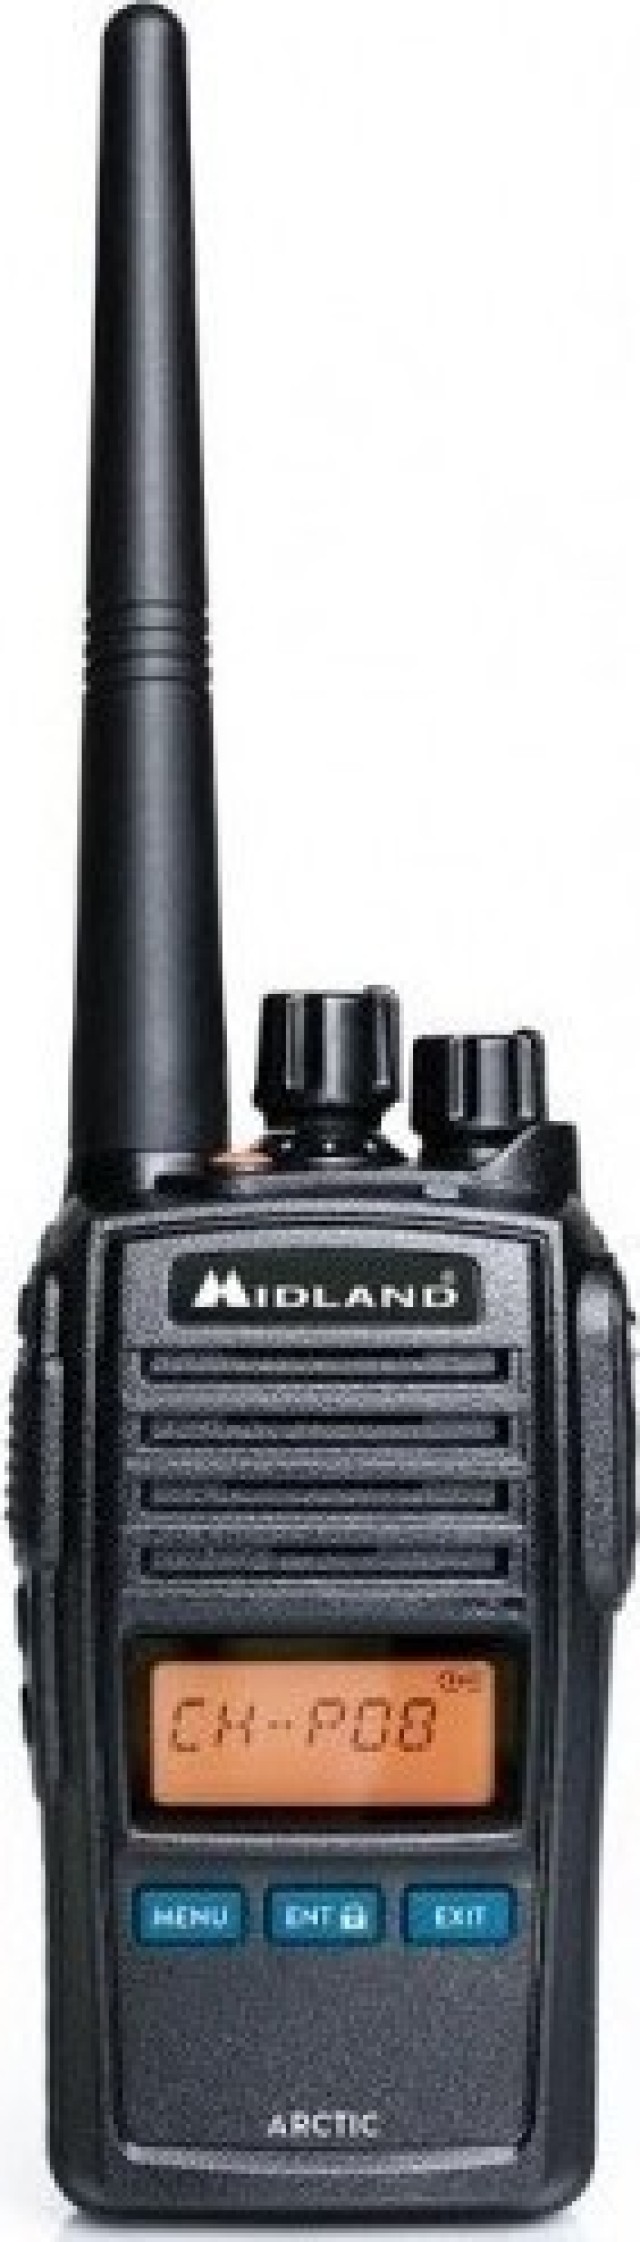 Midland ARCTIC 5 Watt VHF Marine Transceiver